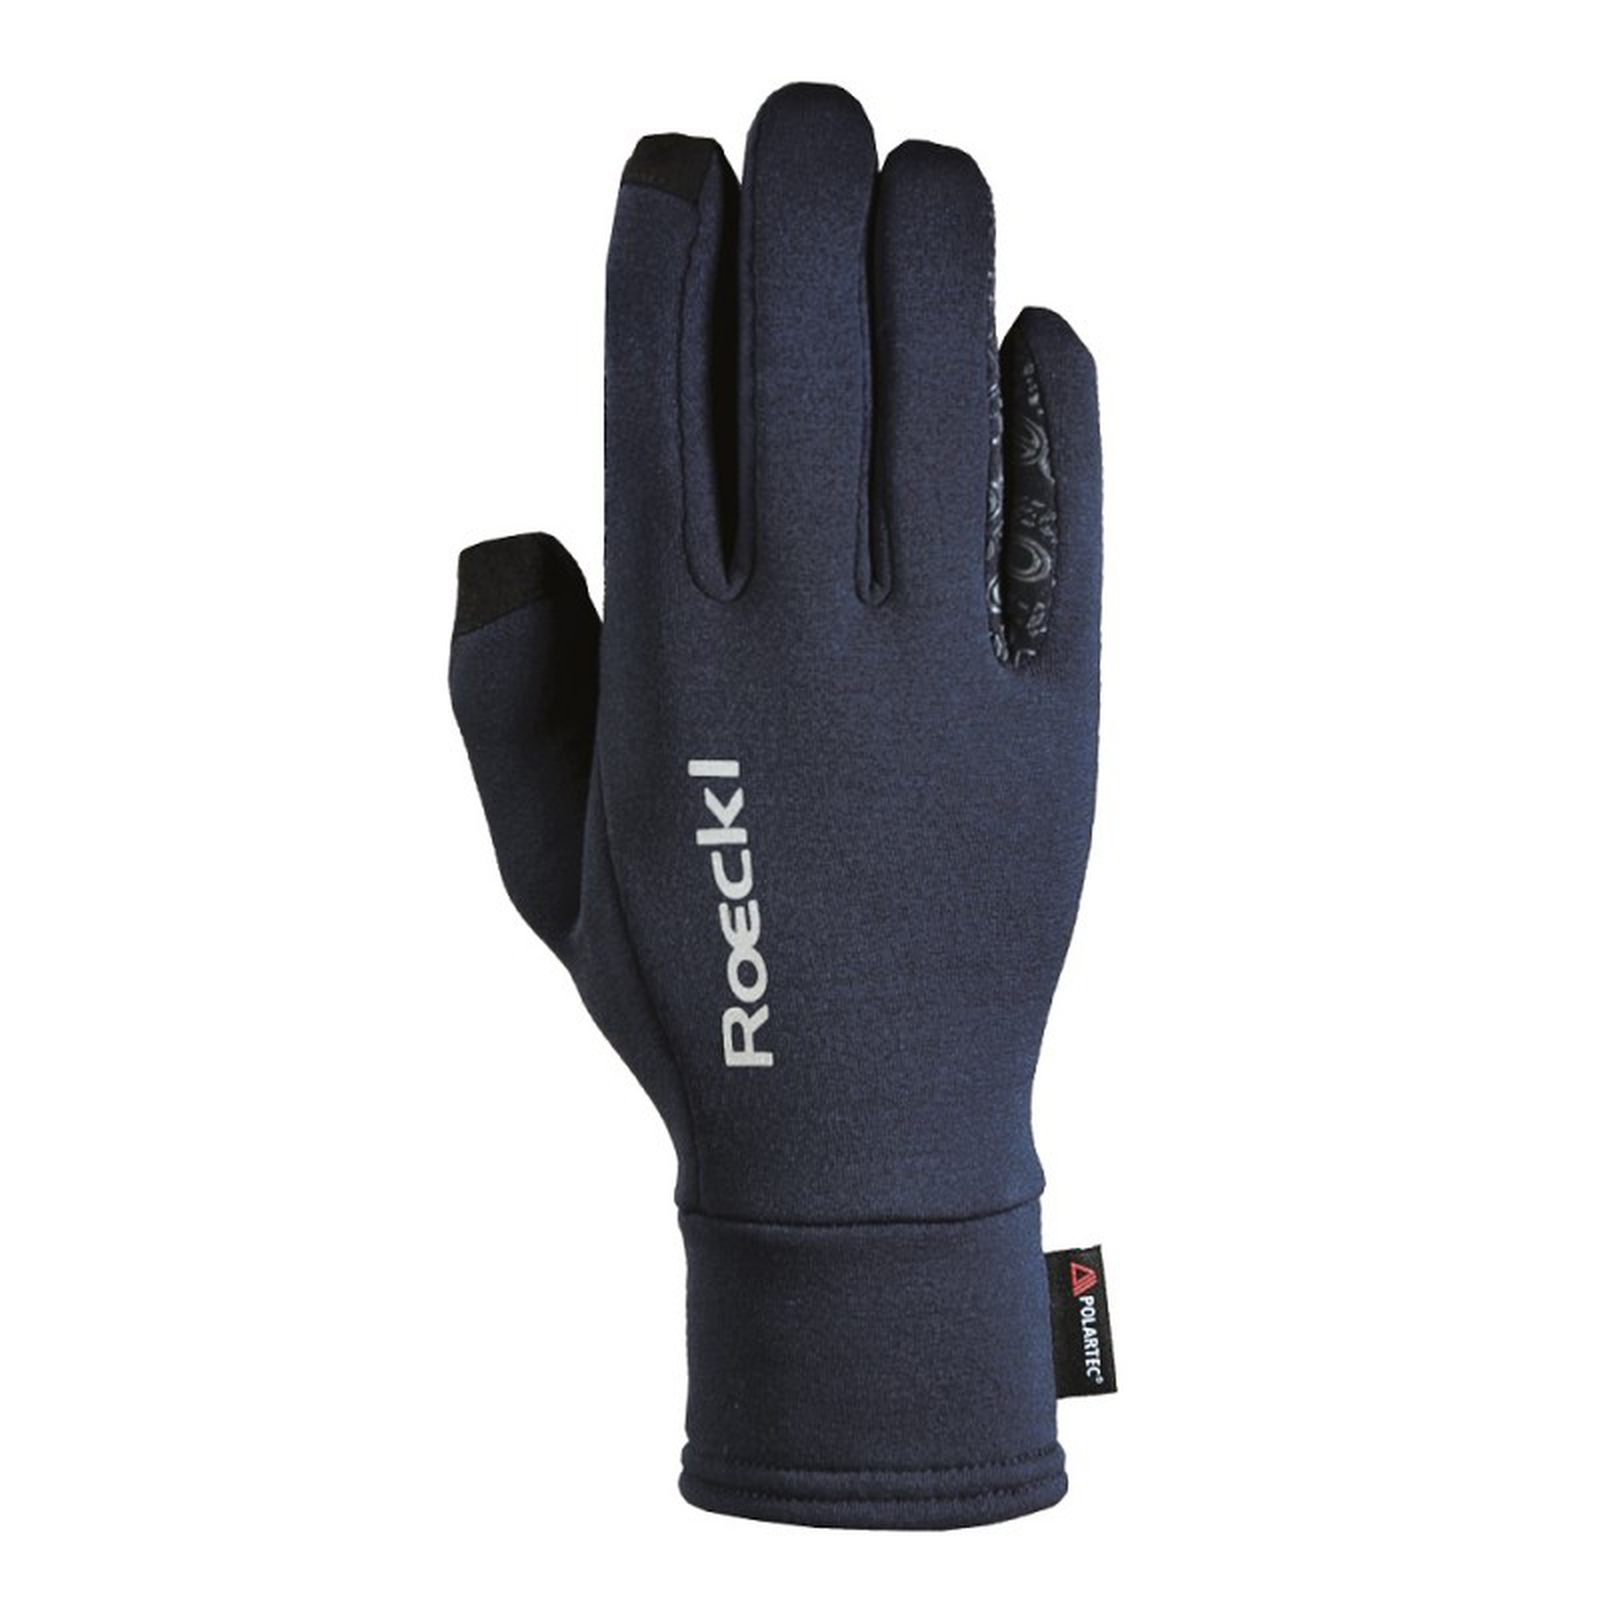 Roeckl Weldon Polartec Power Stretch Handschuhe kaufen